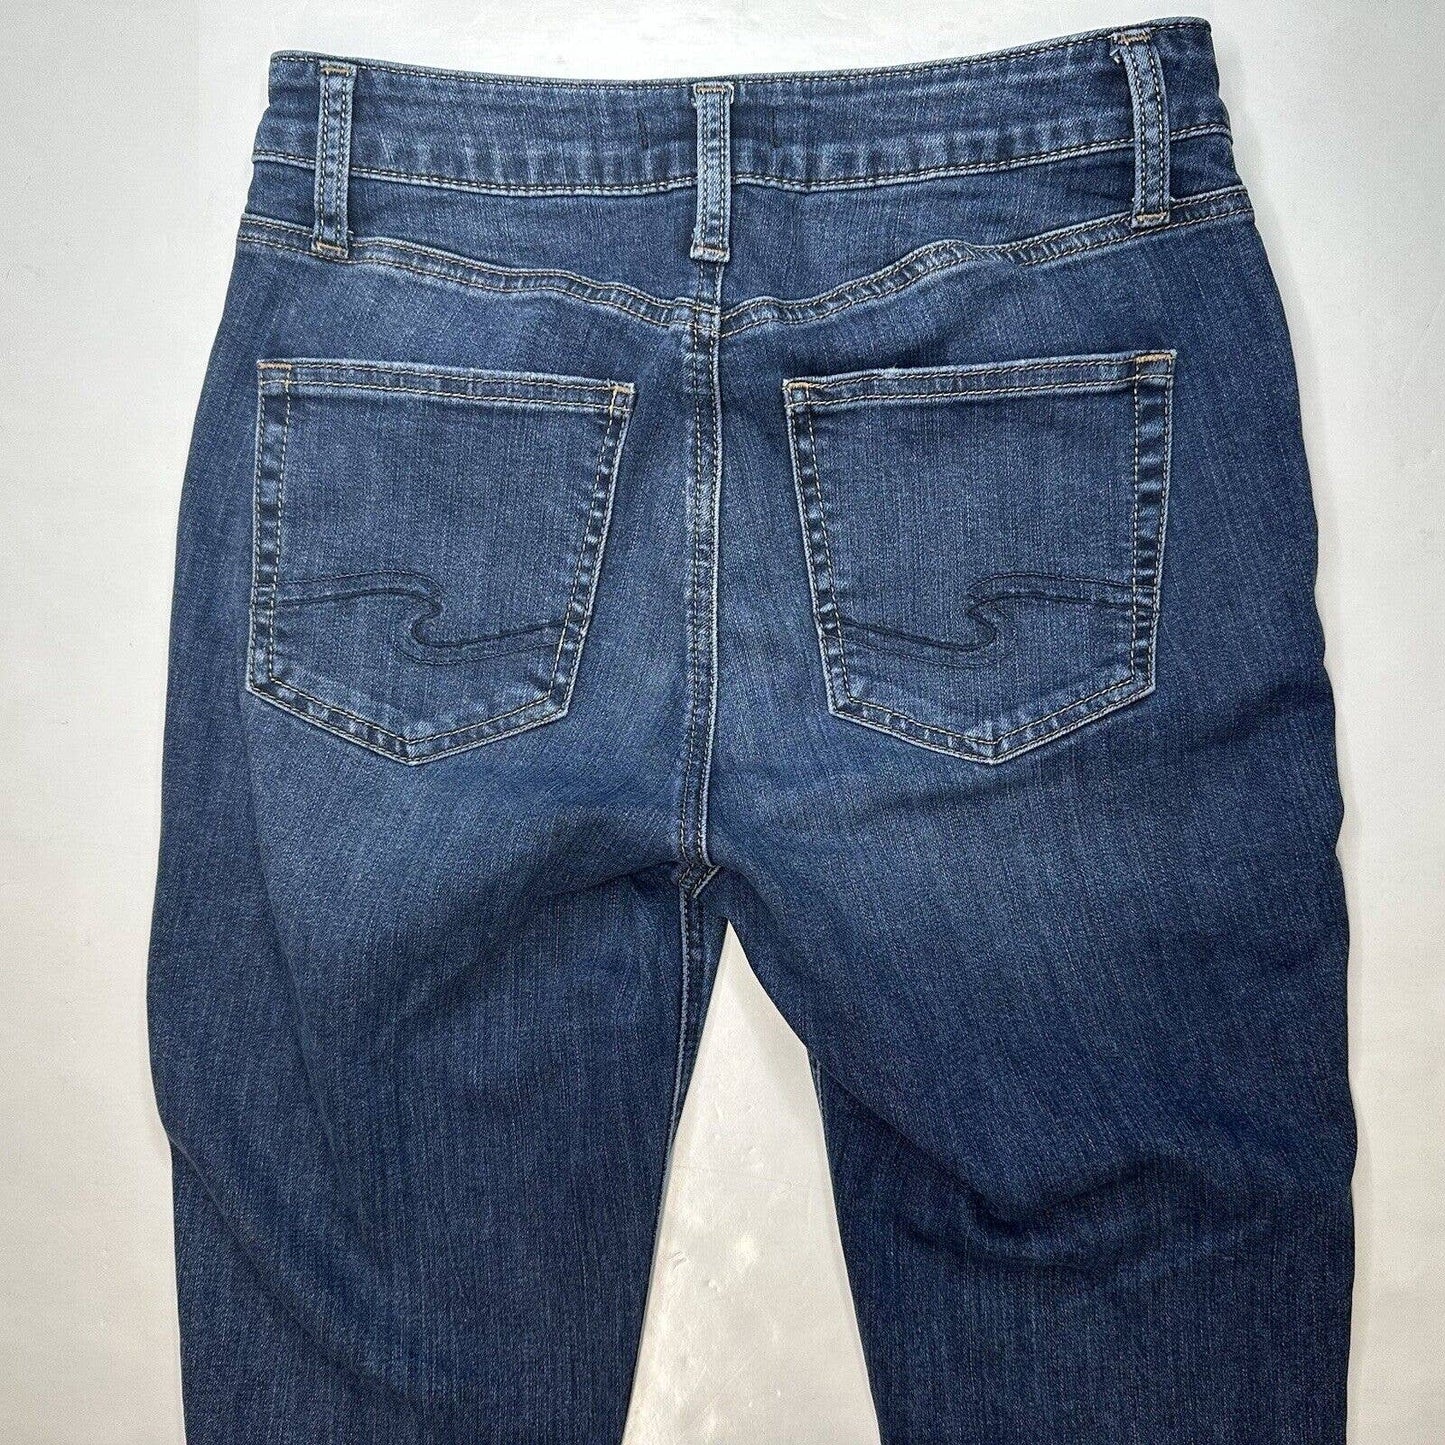 Silver Avery Skinny Jeans Sz 29 Curvy High Rise Stretch Denim Blue Distressed